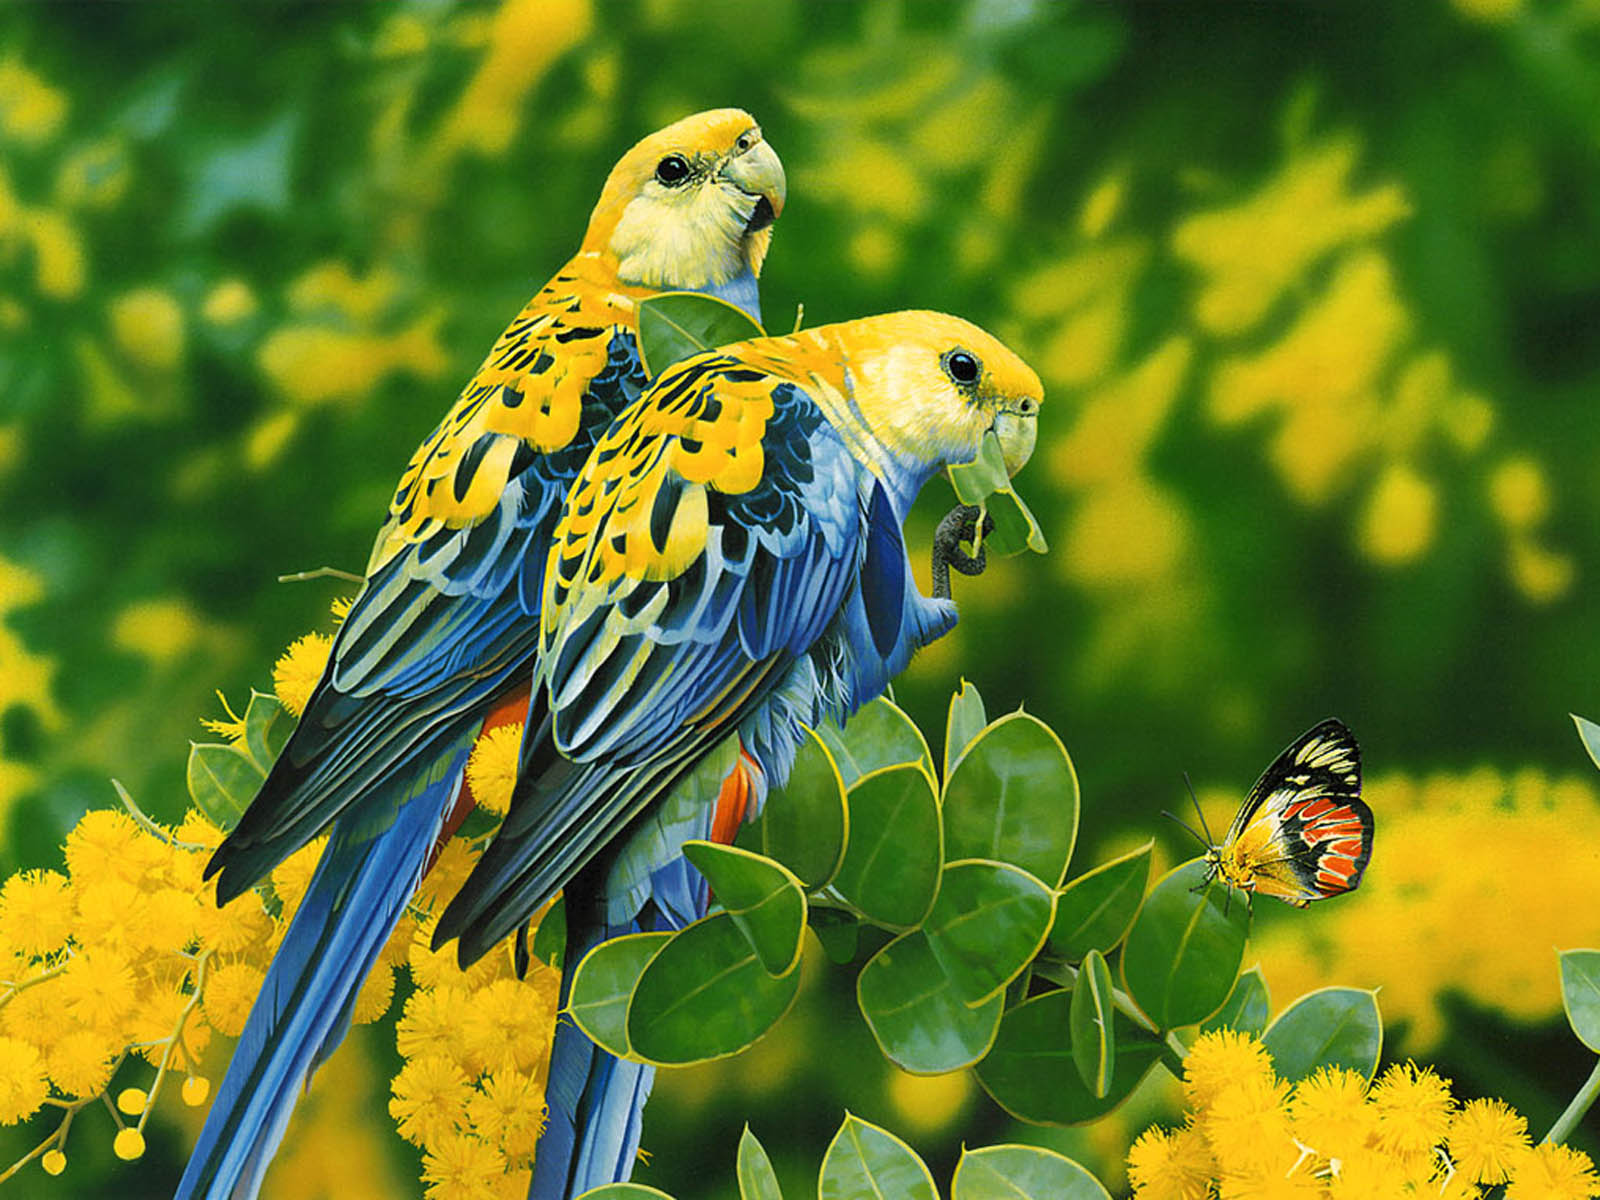 Tag Love Birds Desktop Wallpaper Background Photos Image And